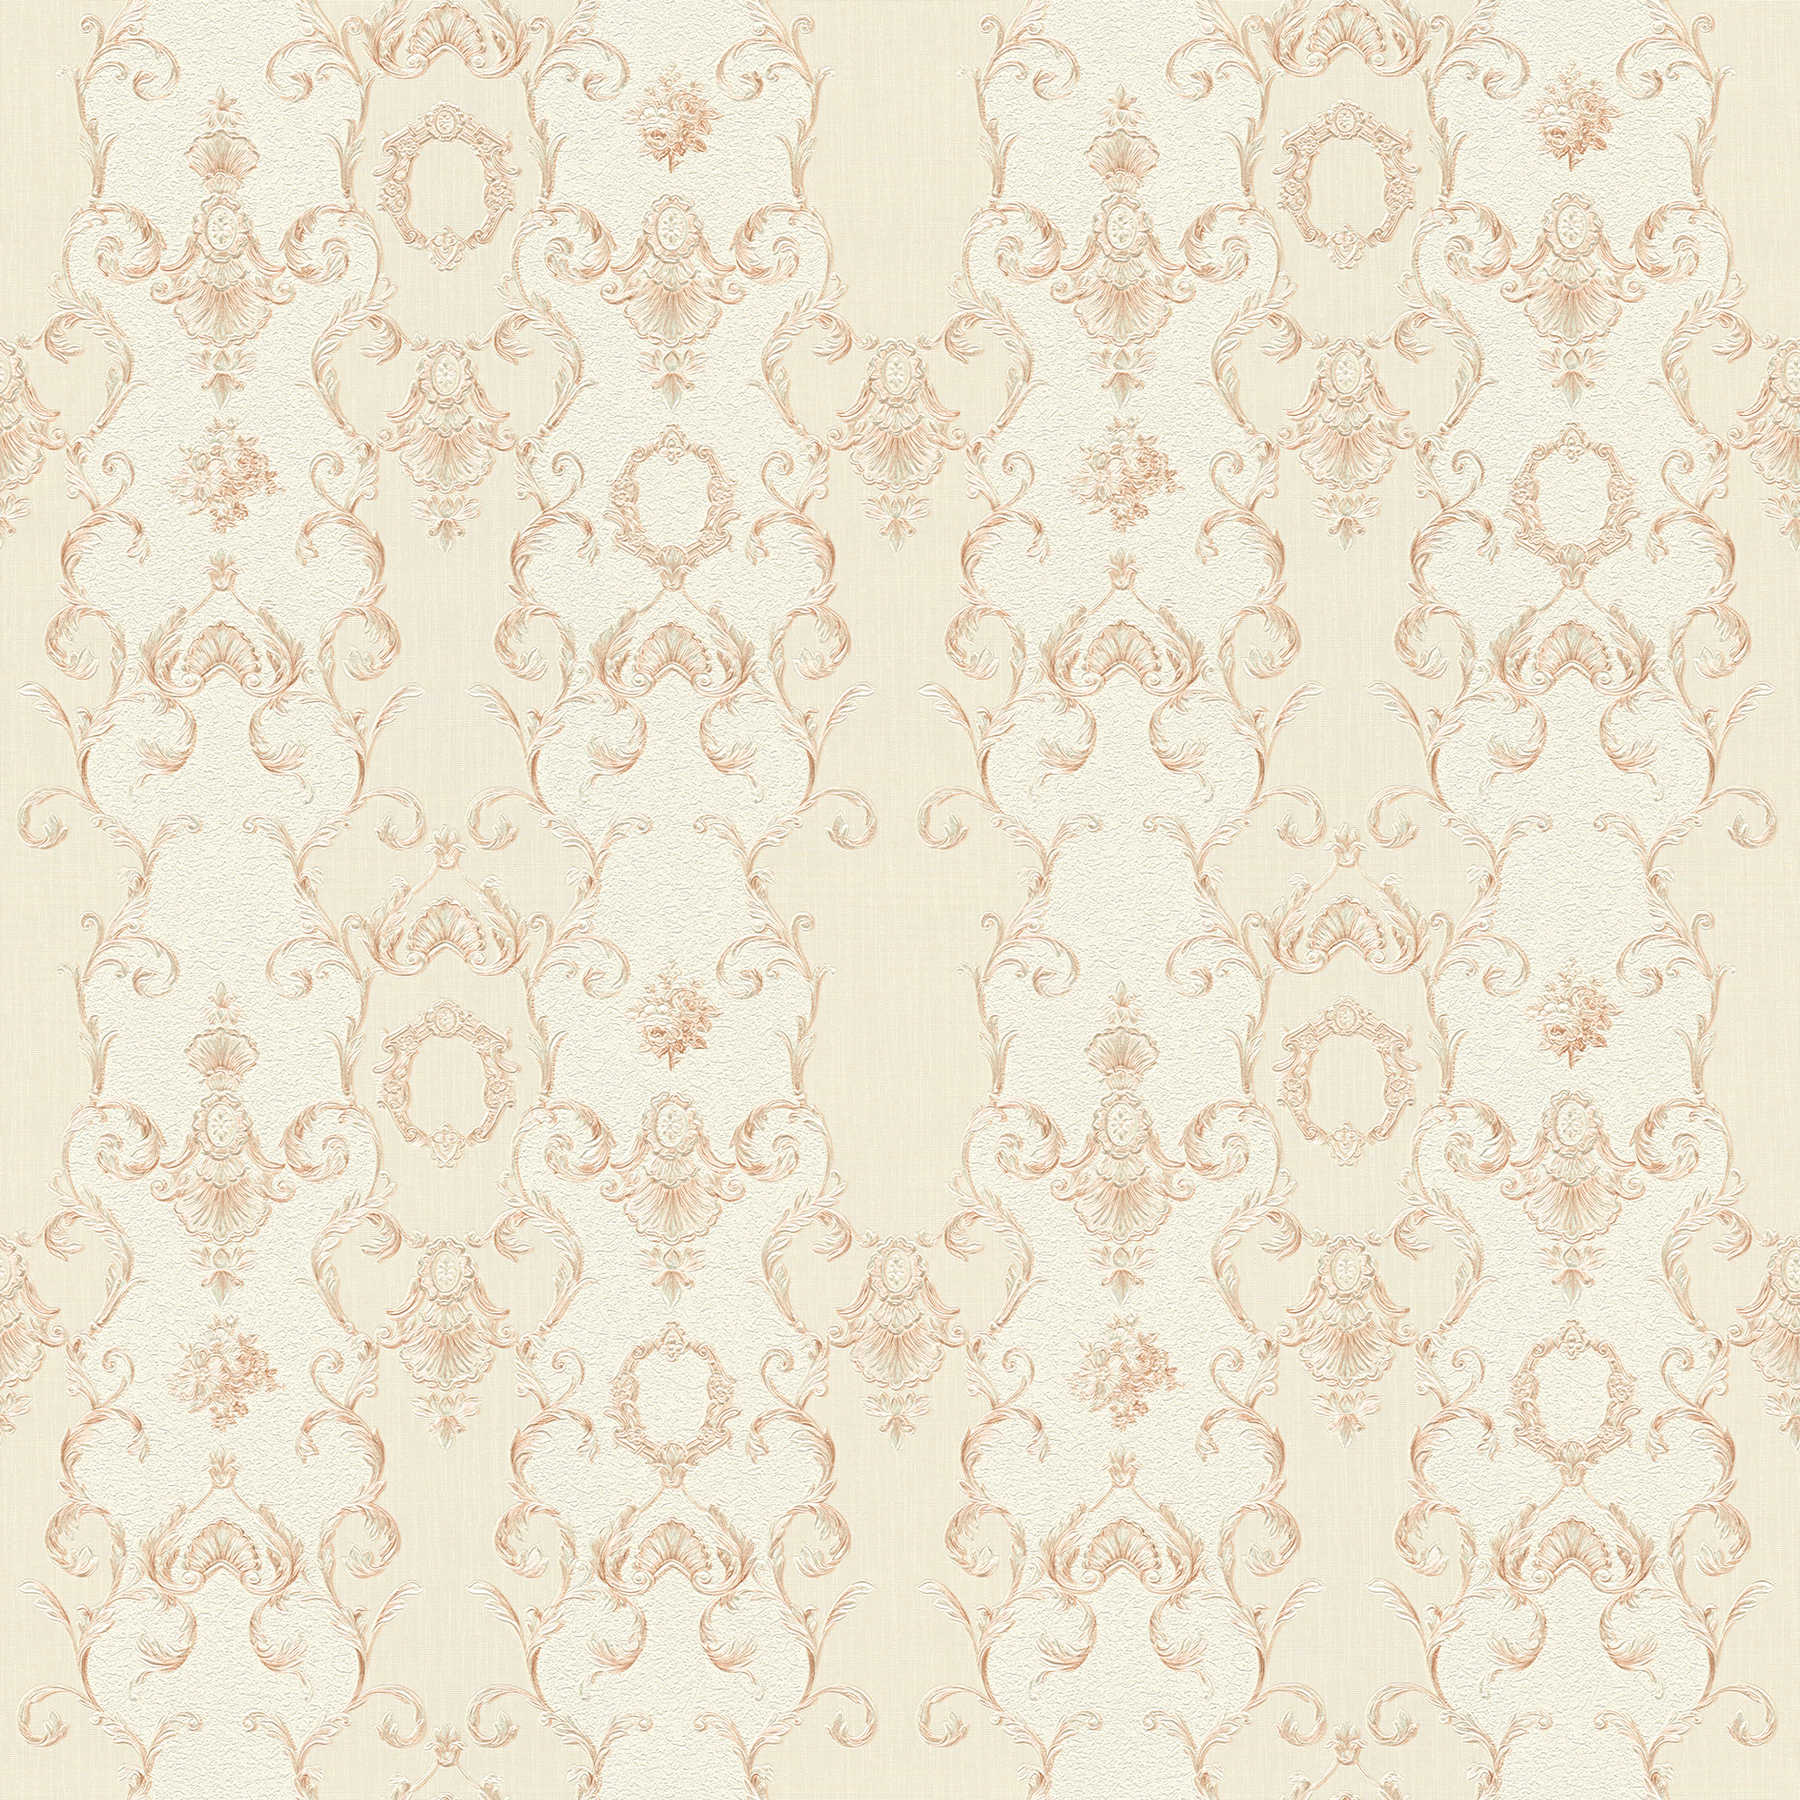 Neo-baroque wallpaper filigree ornaments - beige, cream, metallic
